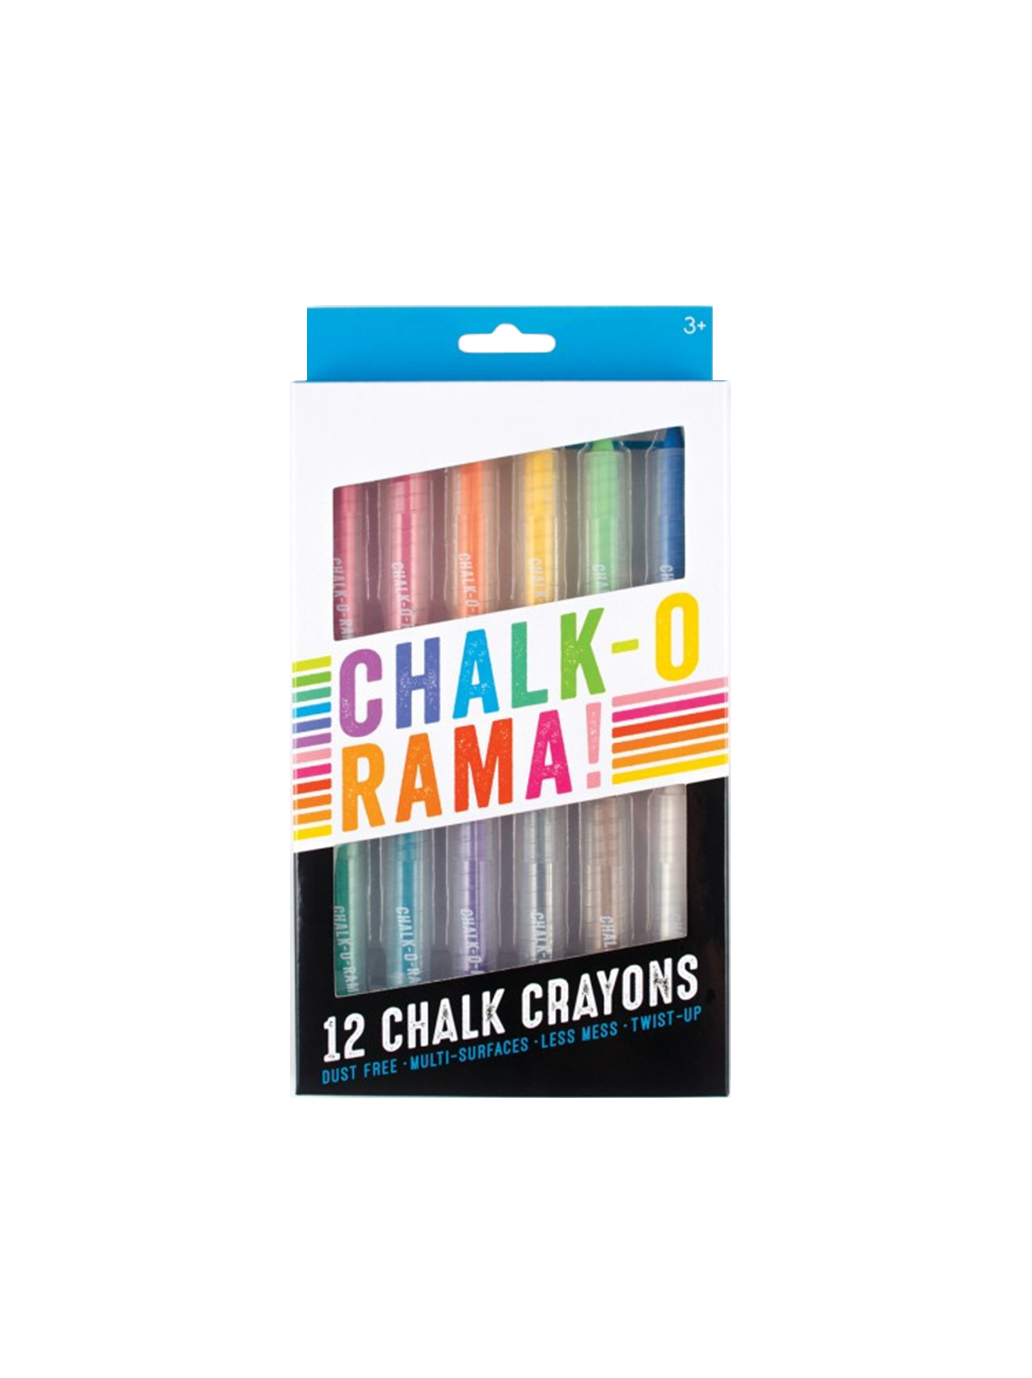 Chalk-O-Rama crayon